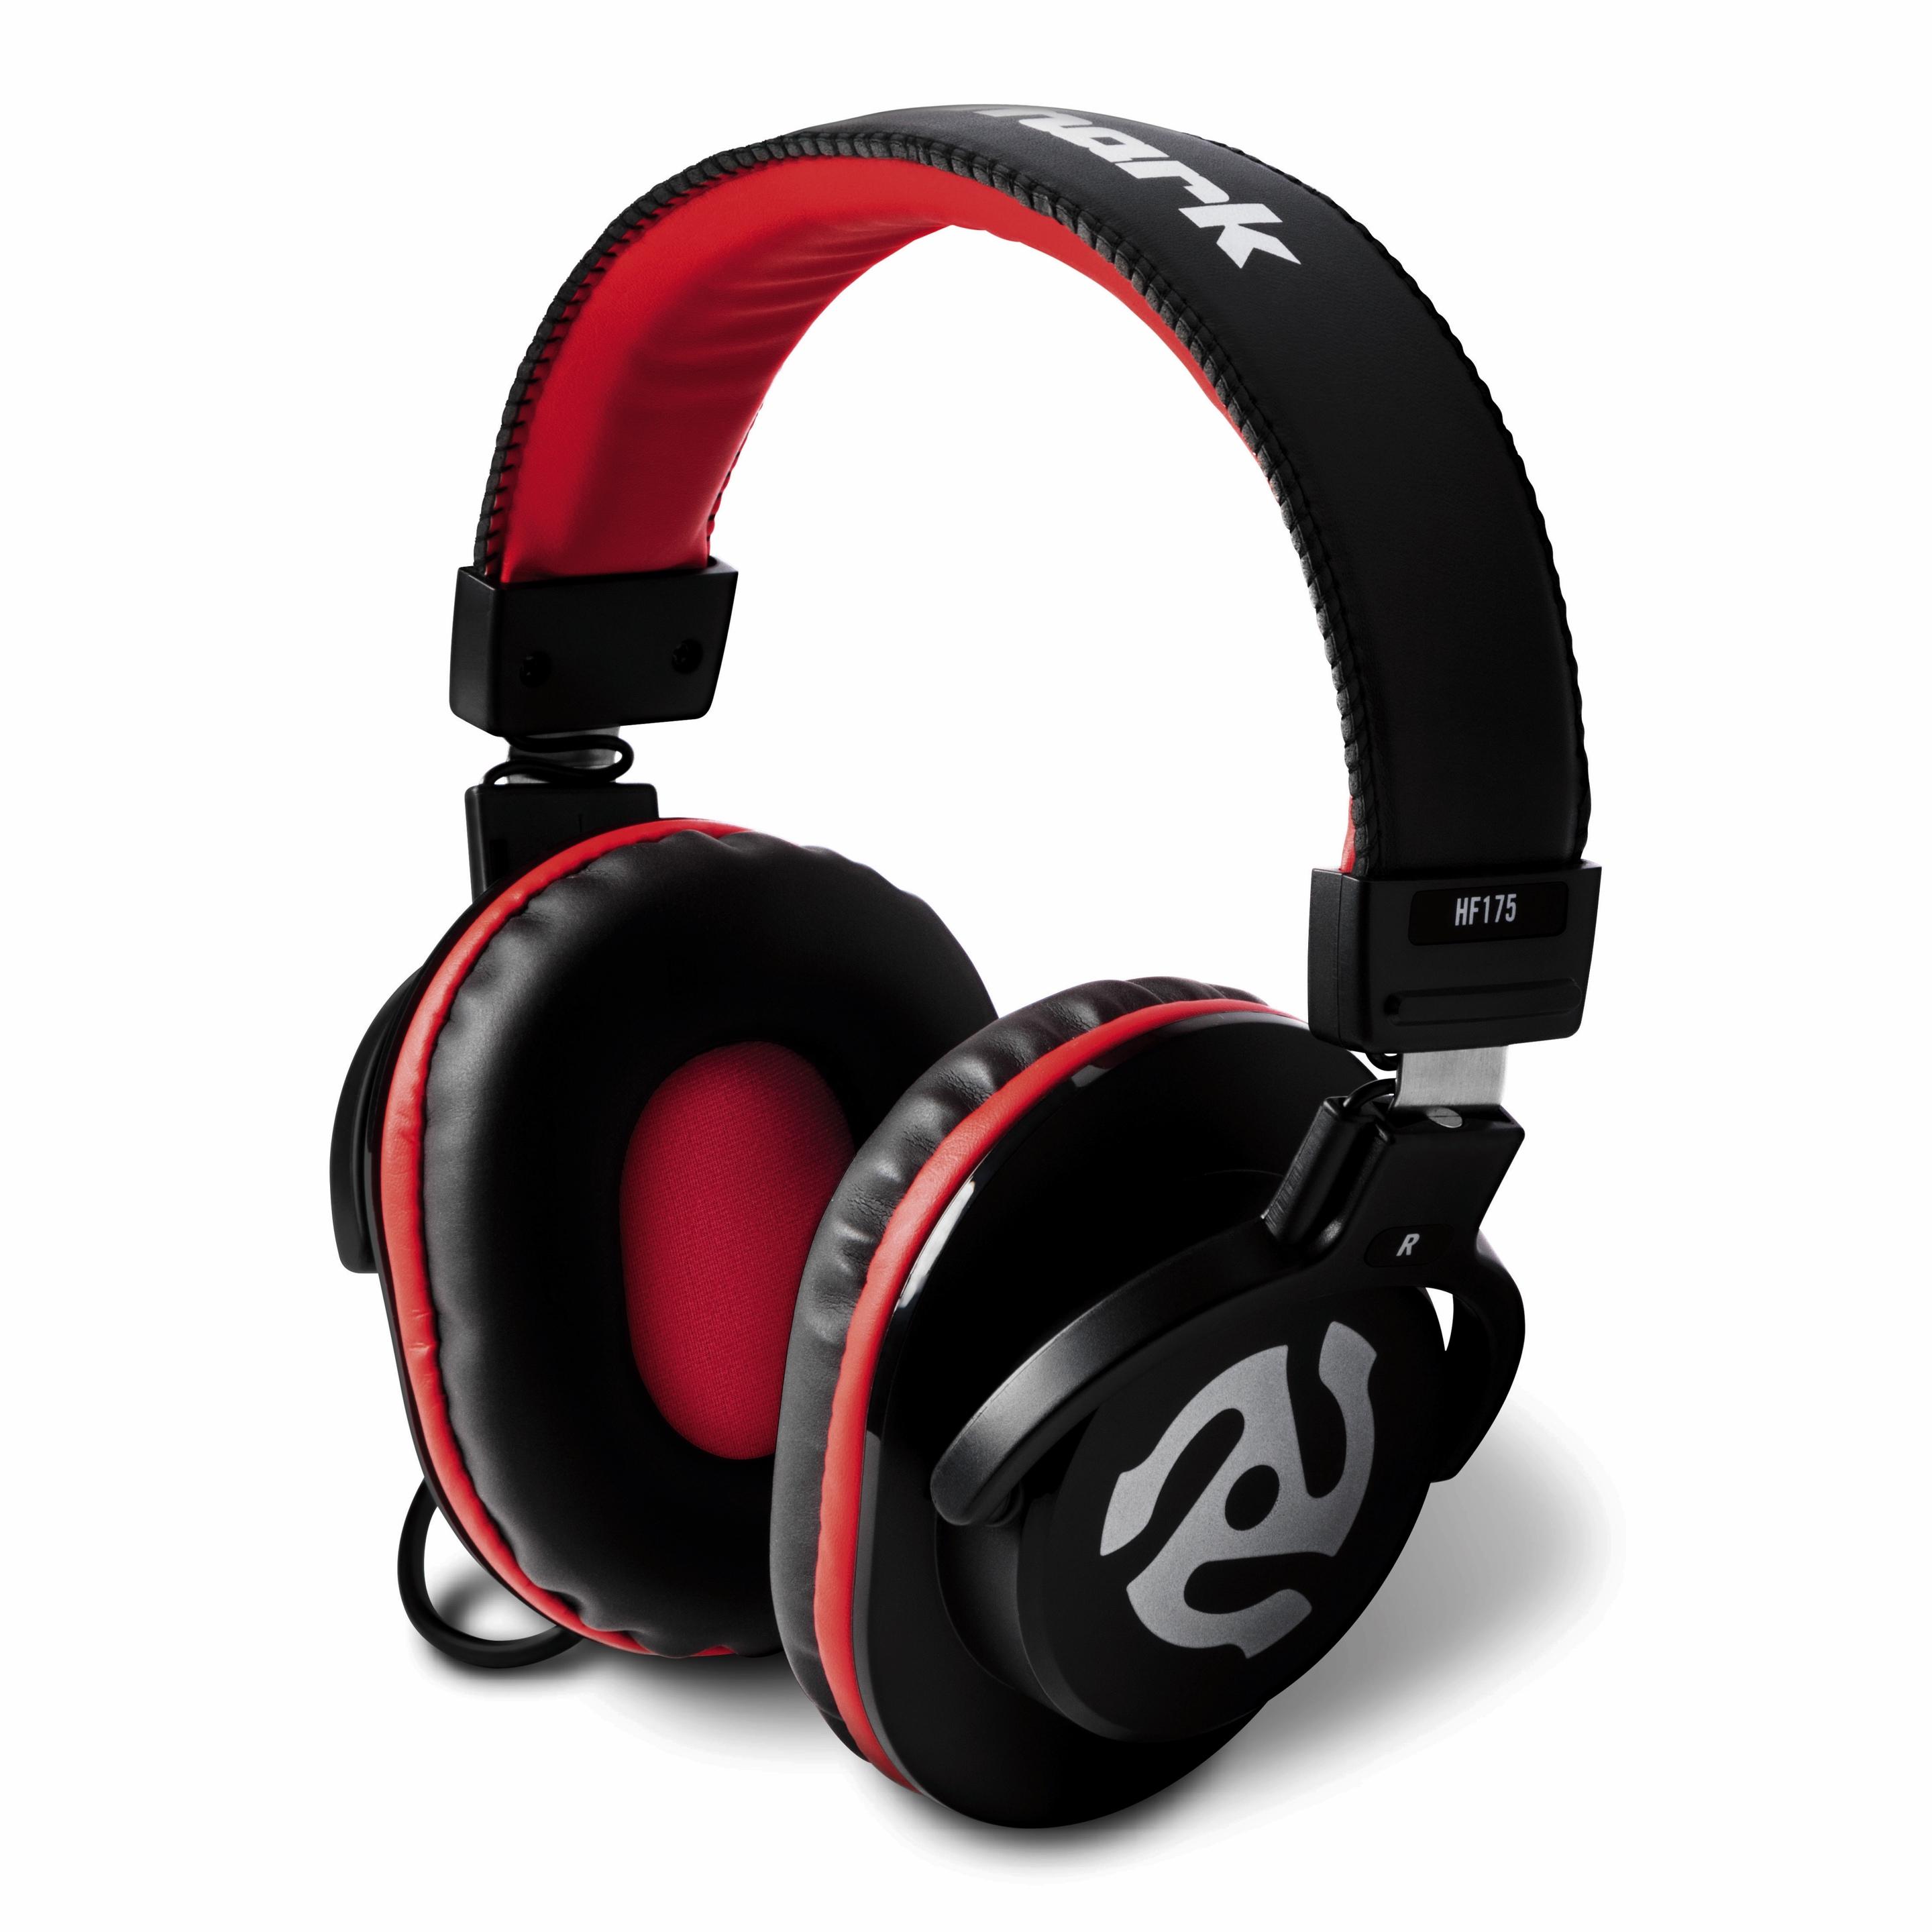 Numark HF175 headphones